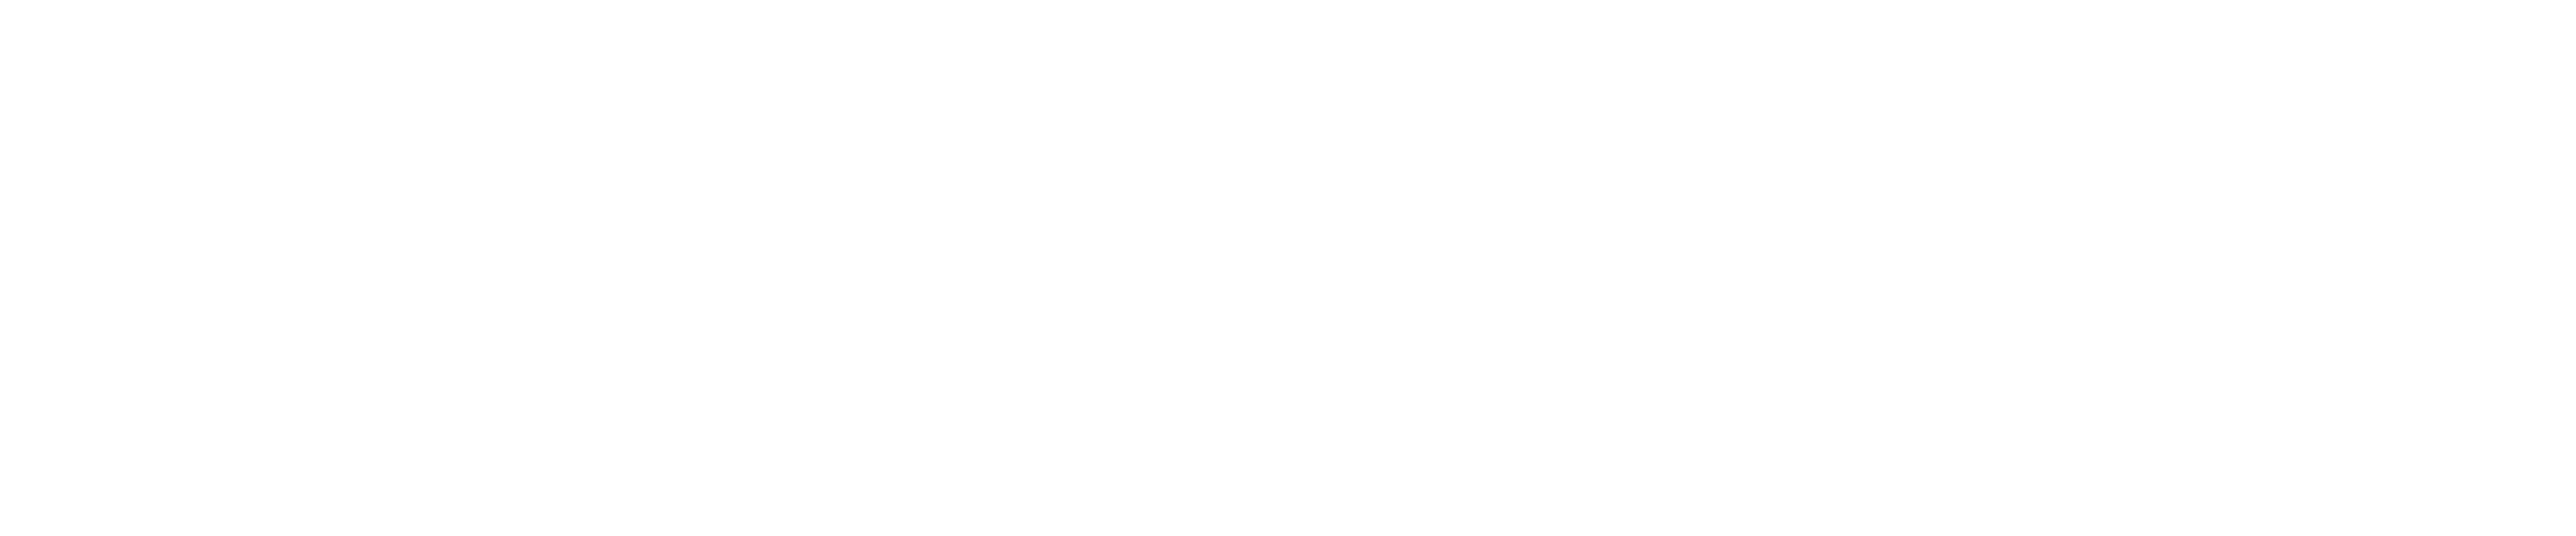 Infosearch logo